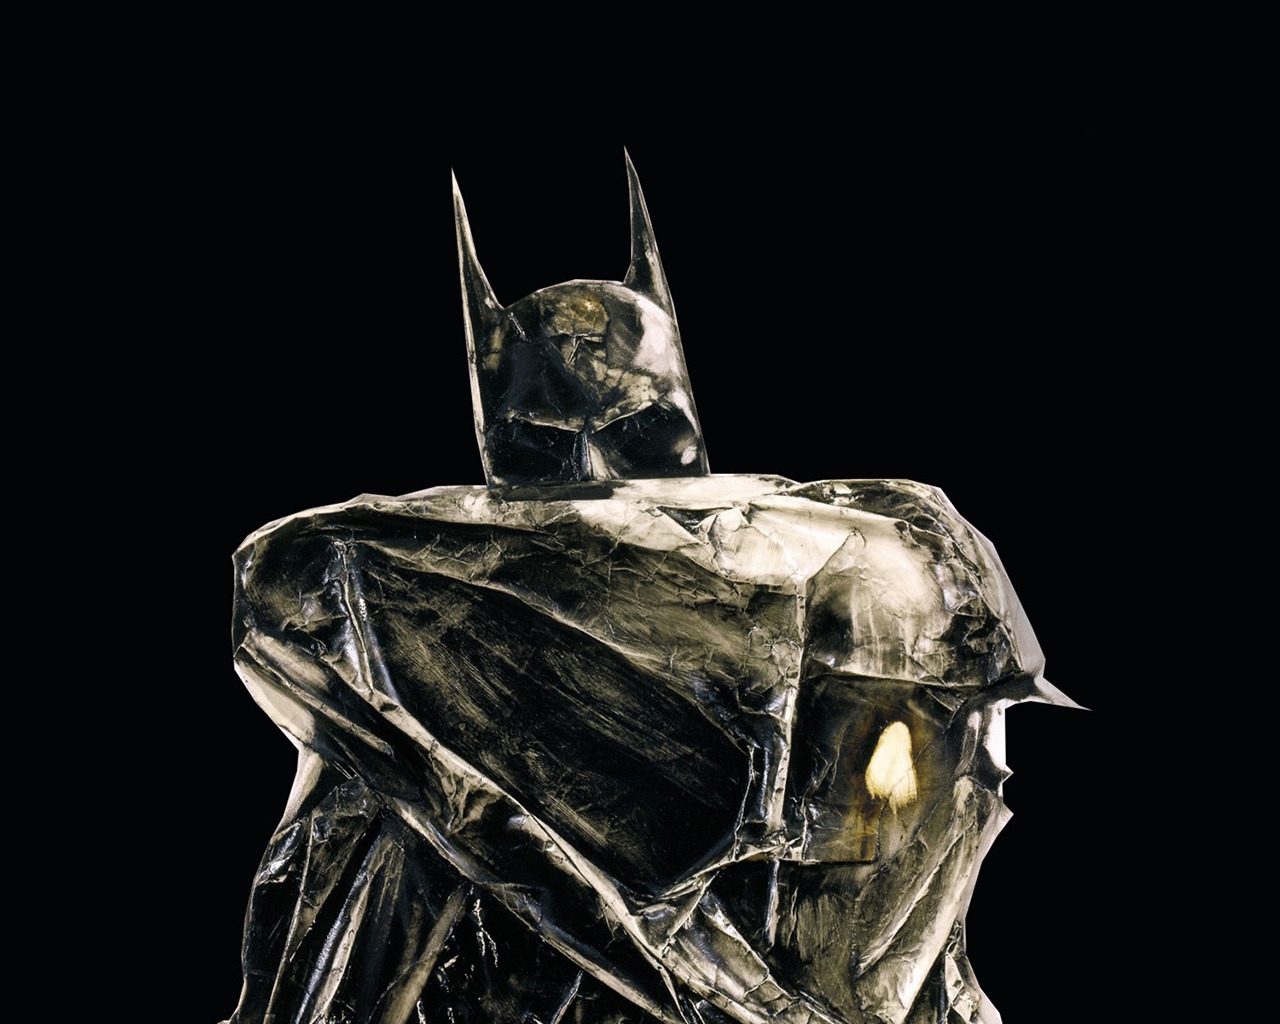 Iron Batman for 1280 x 1024 resolution